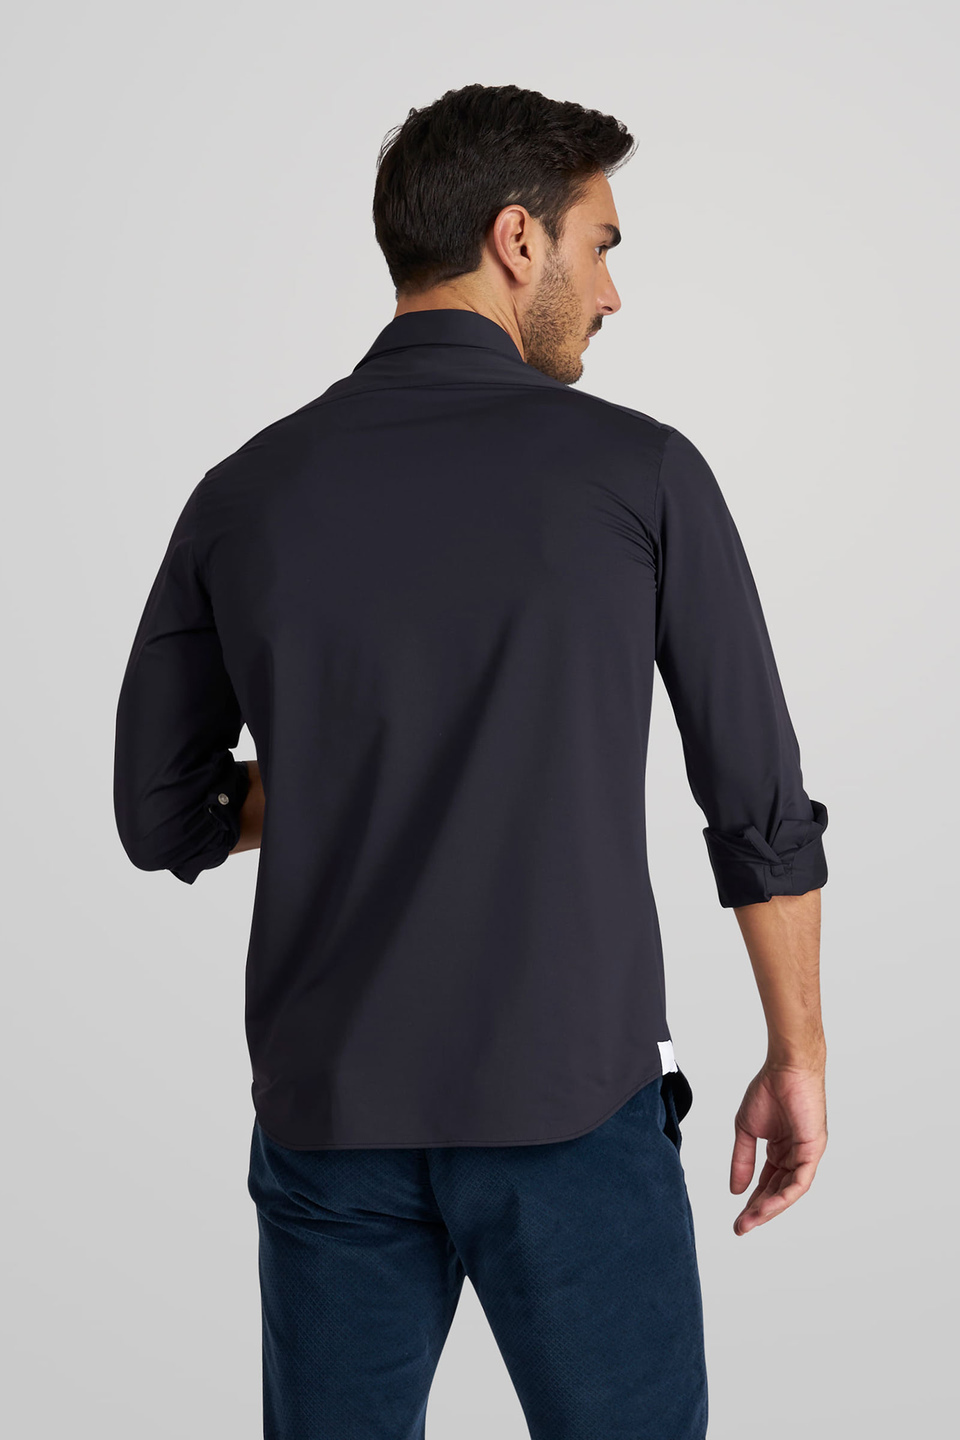 Custom-fit 100% cotton shirt - La Martina - Official Online Shop